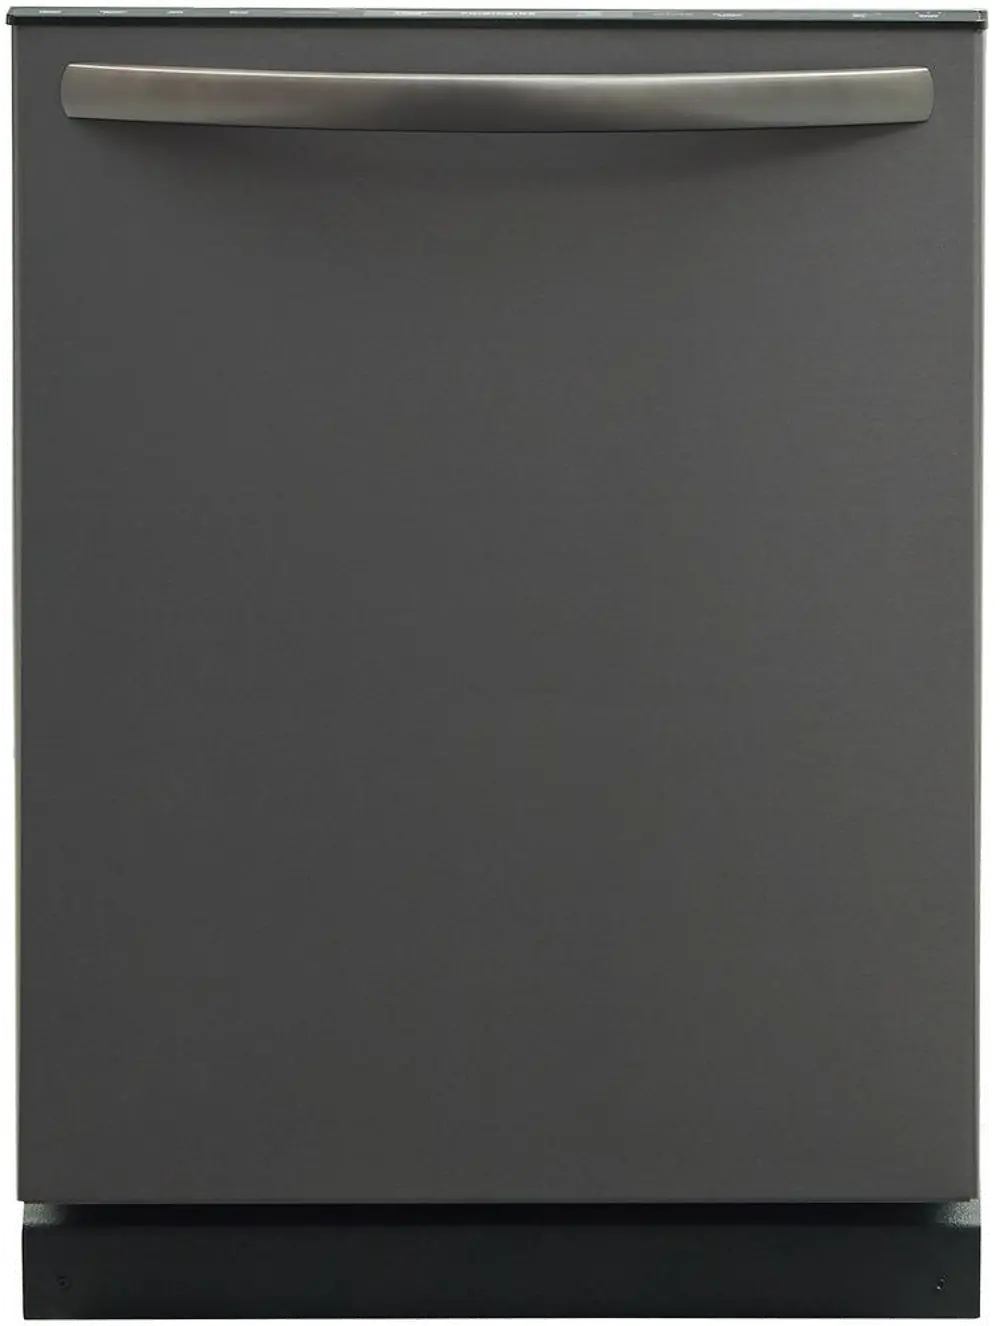 FFID2426TD Frigidaire Top Control Dishwasher - Black Stainless Steel-1